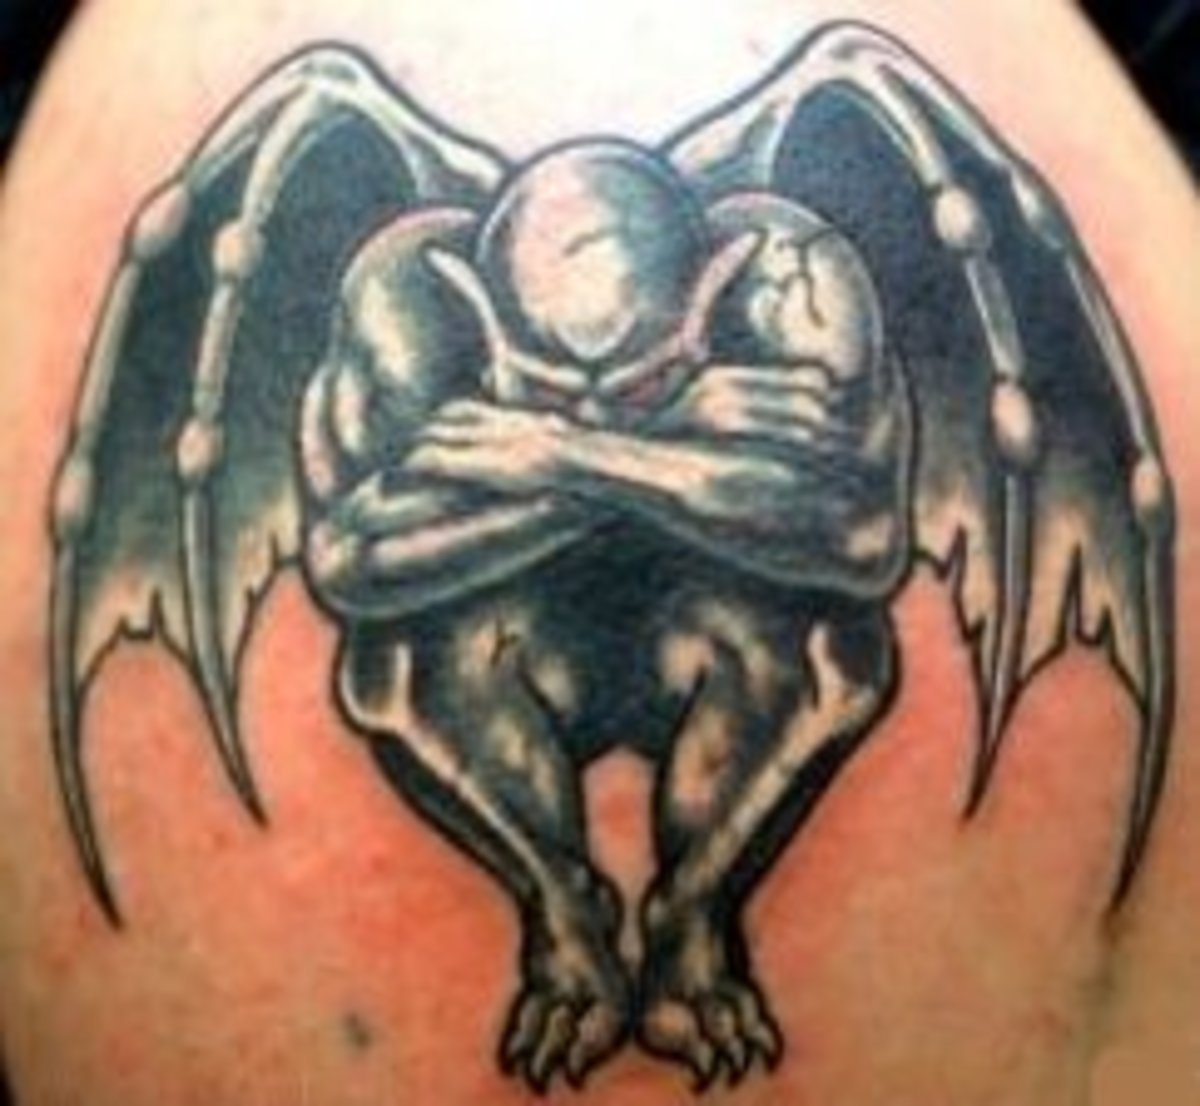 Tattoo Ideas: Gargoyle Tattoo Designs (With Images)